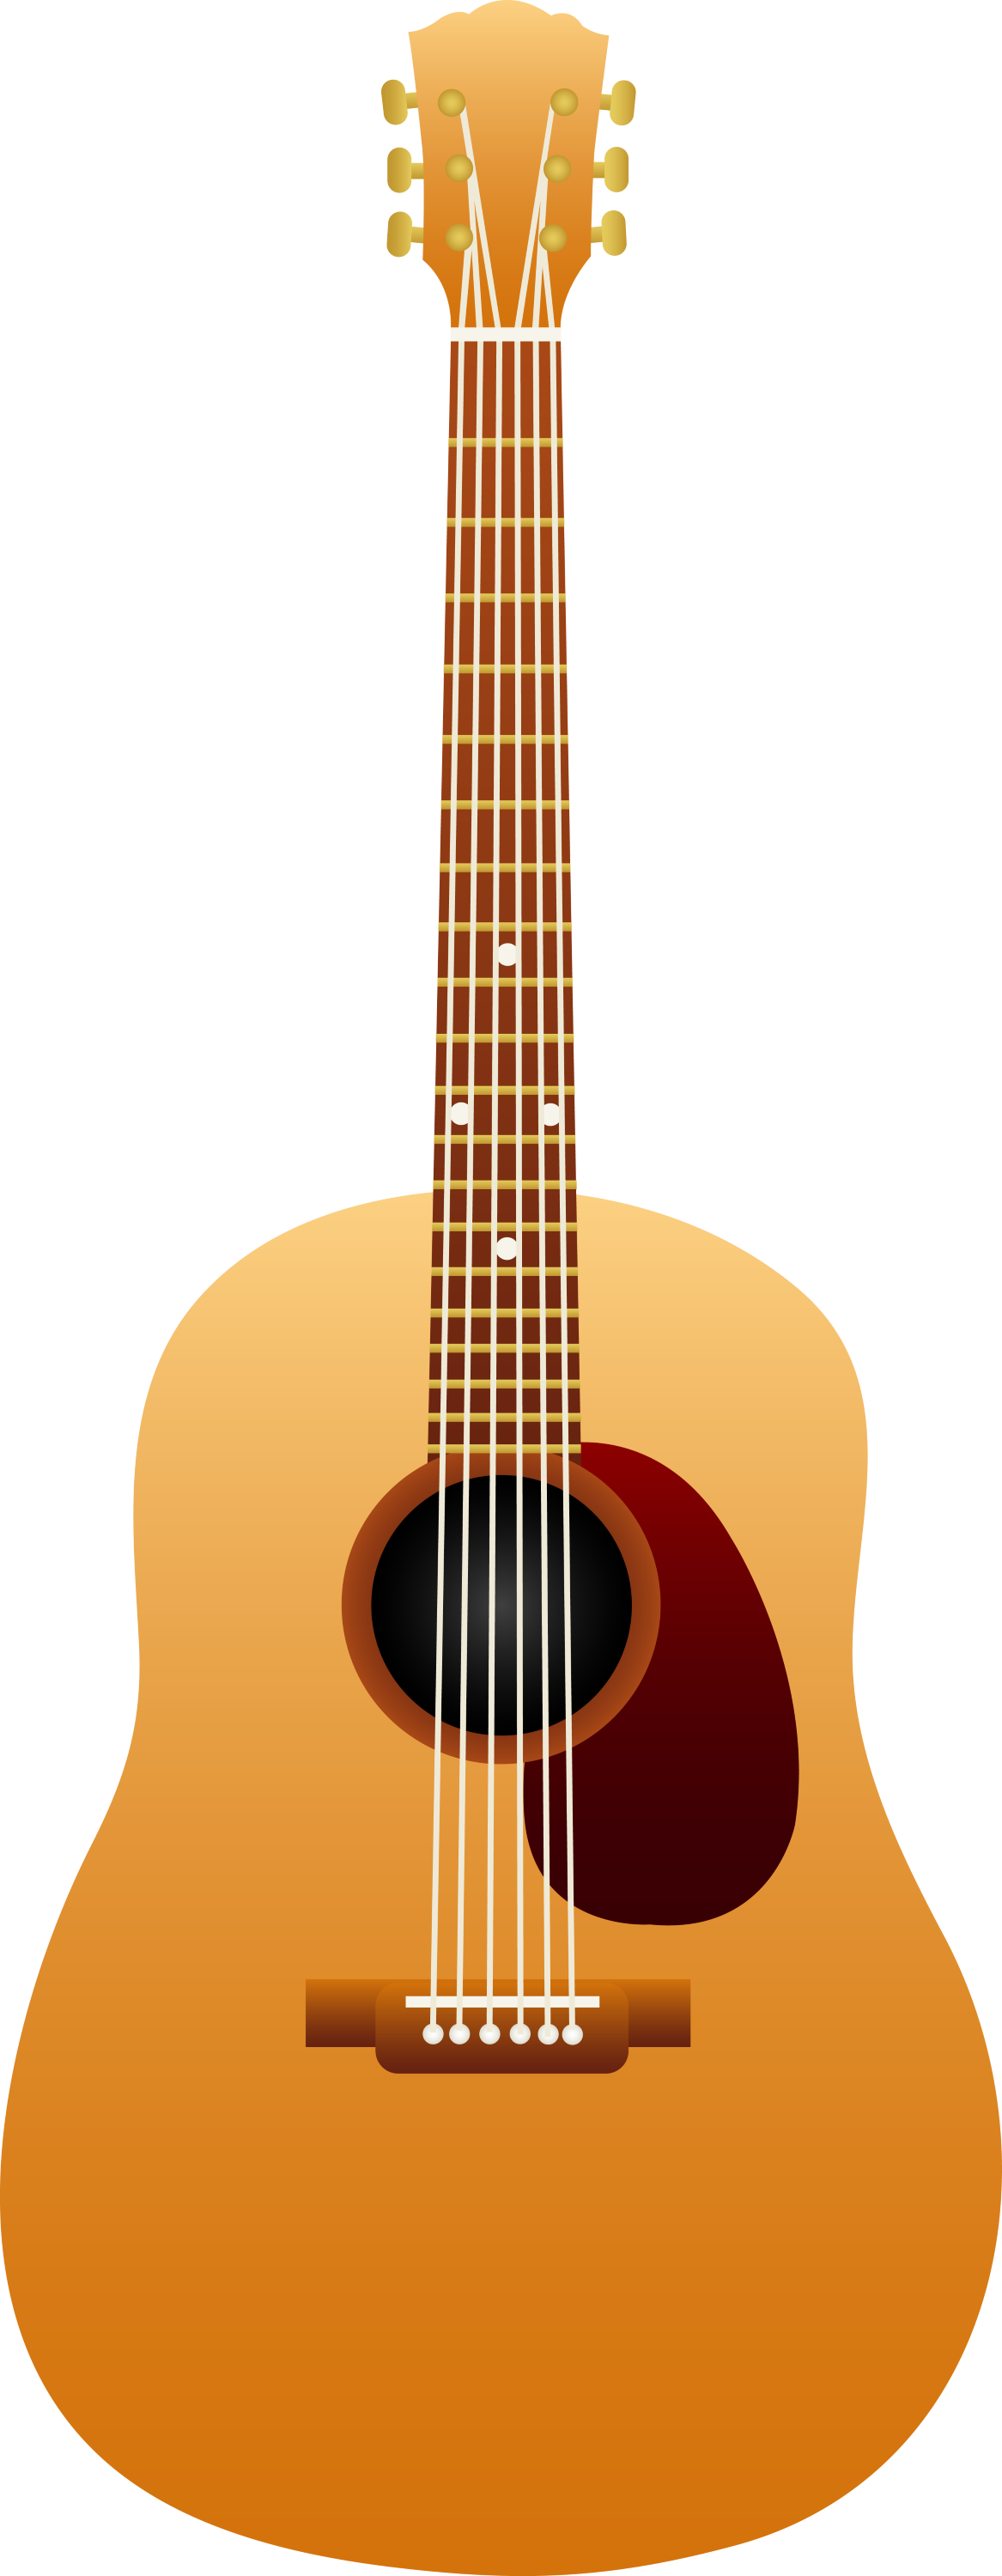 Classical Acoustic Wooden Guitar Free Clip Art